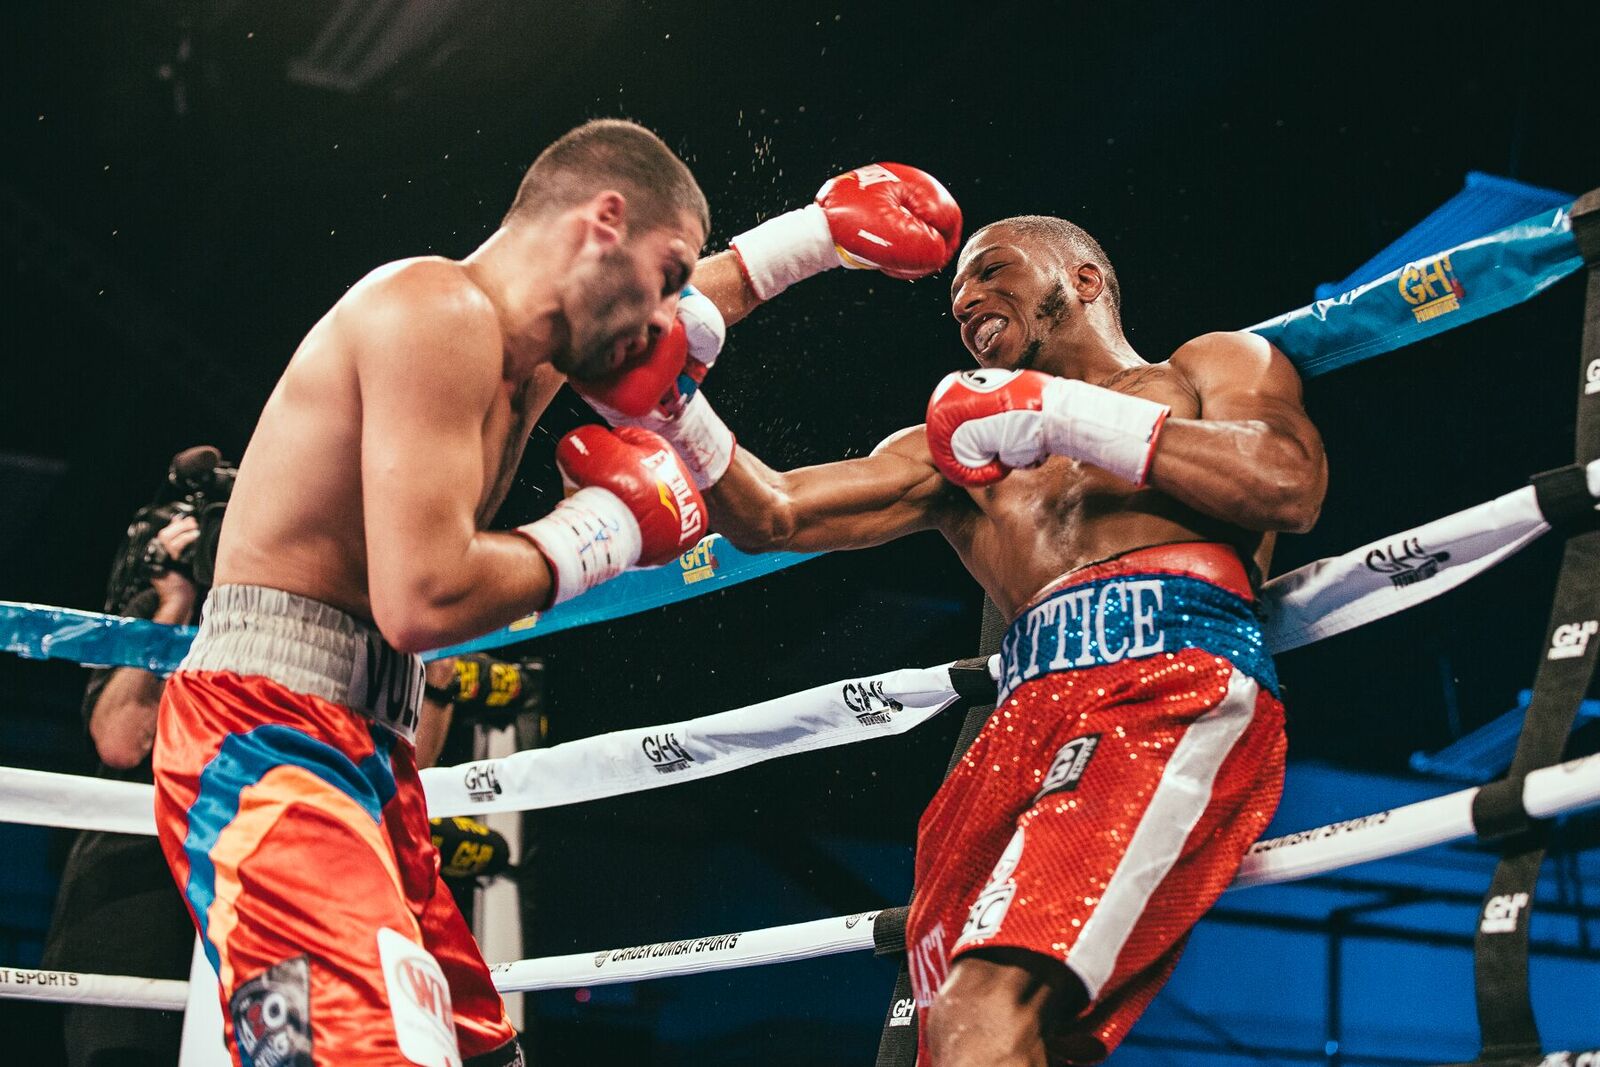 Lightweight Thomas Mattice (right) vs. Zhora Hamazaryan. Photo credit: Rosie Cohe/Showtime